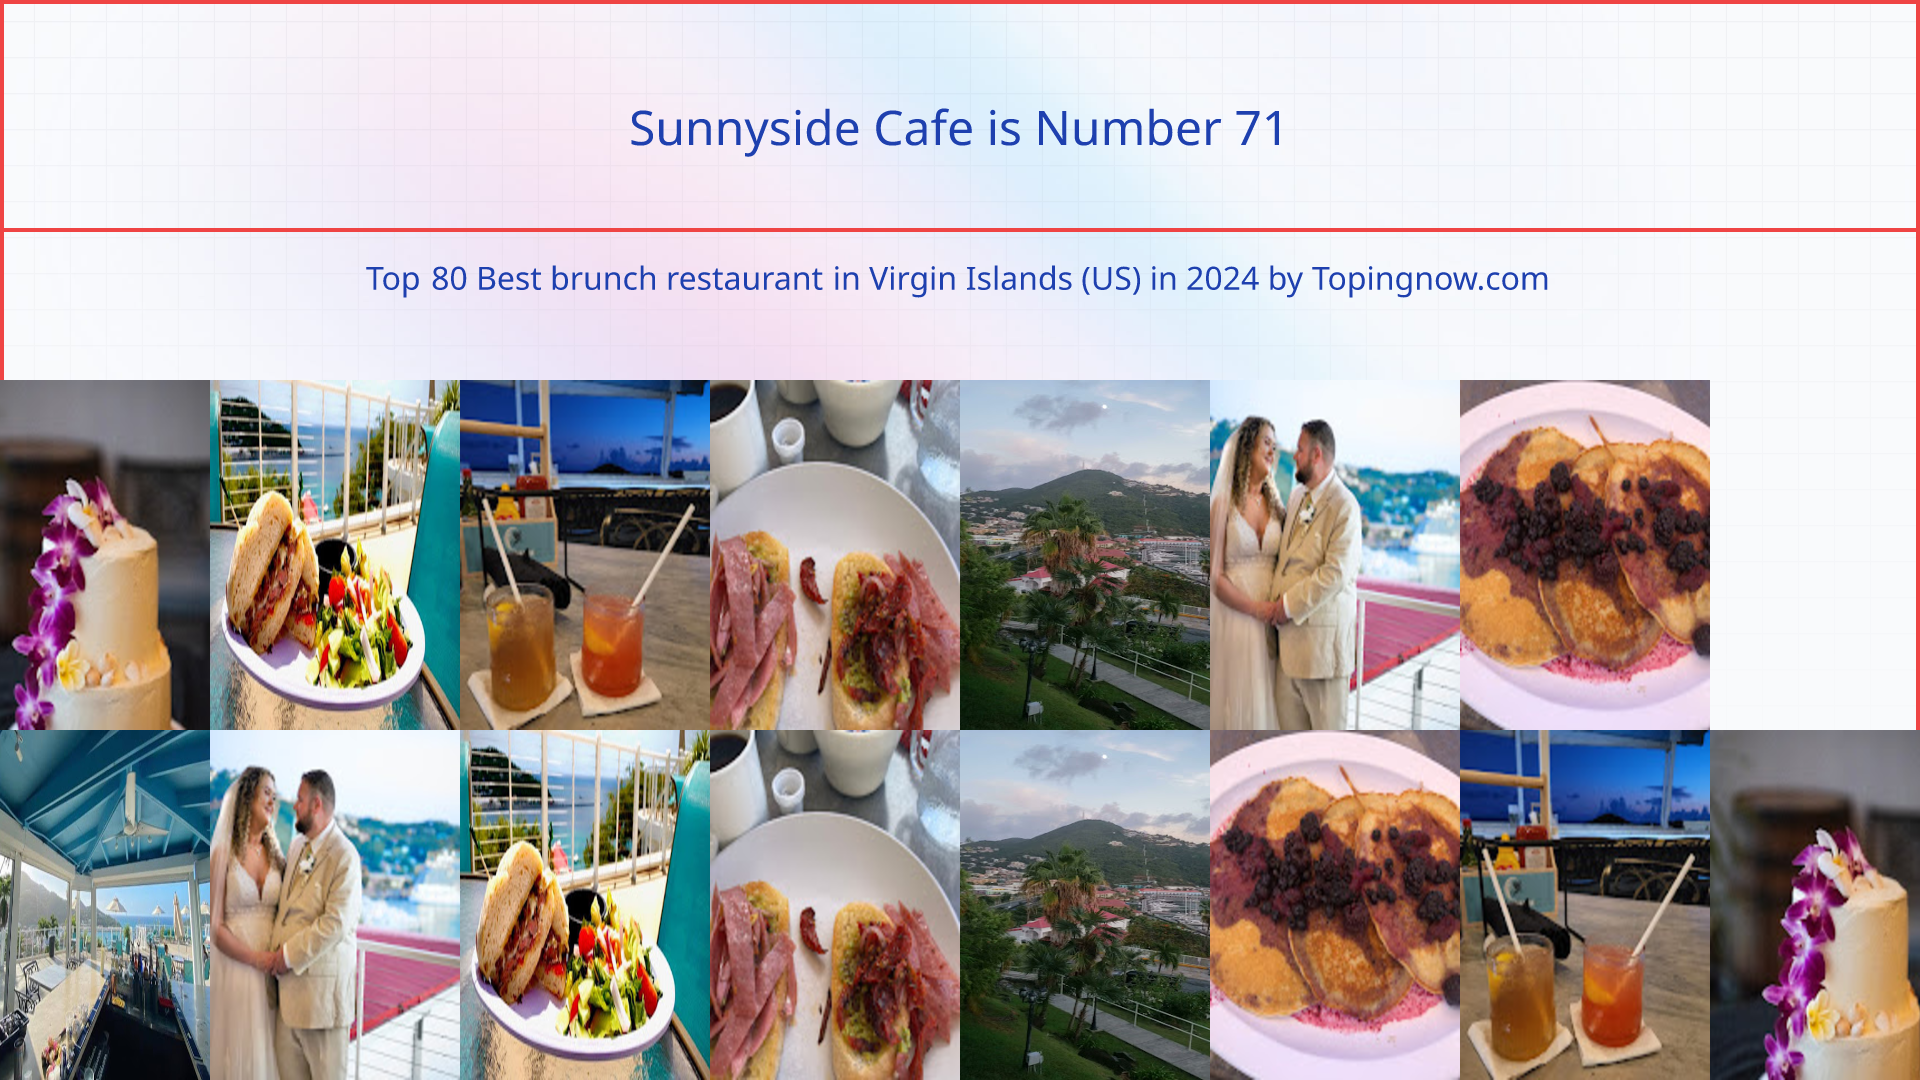 Sunnyside Cafe: Top 80 Best brunch restaurant in Virgin Islands (US) in 2024